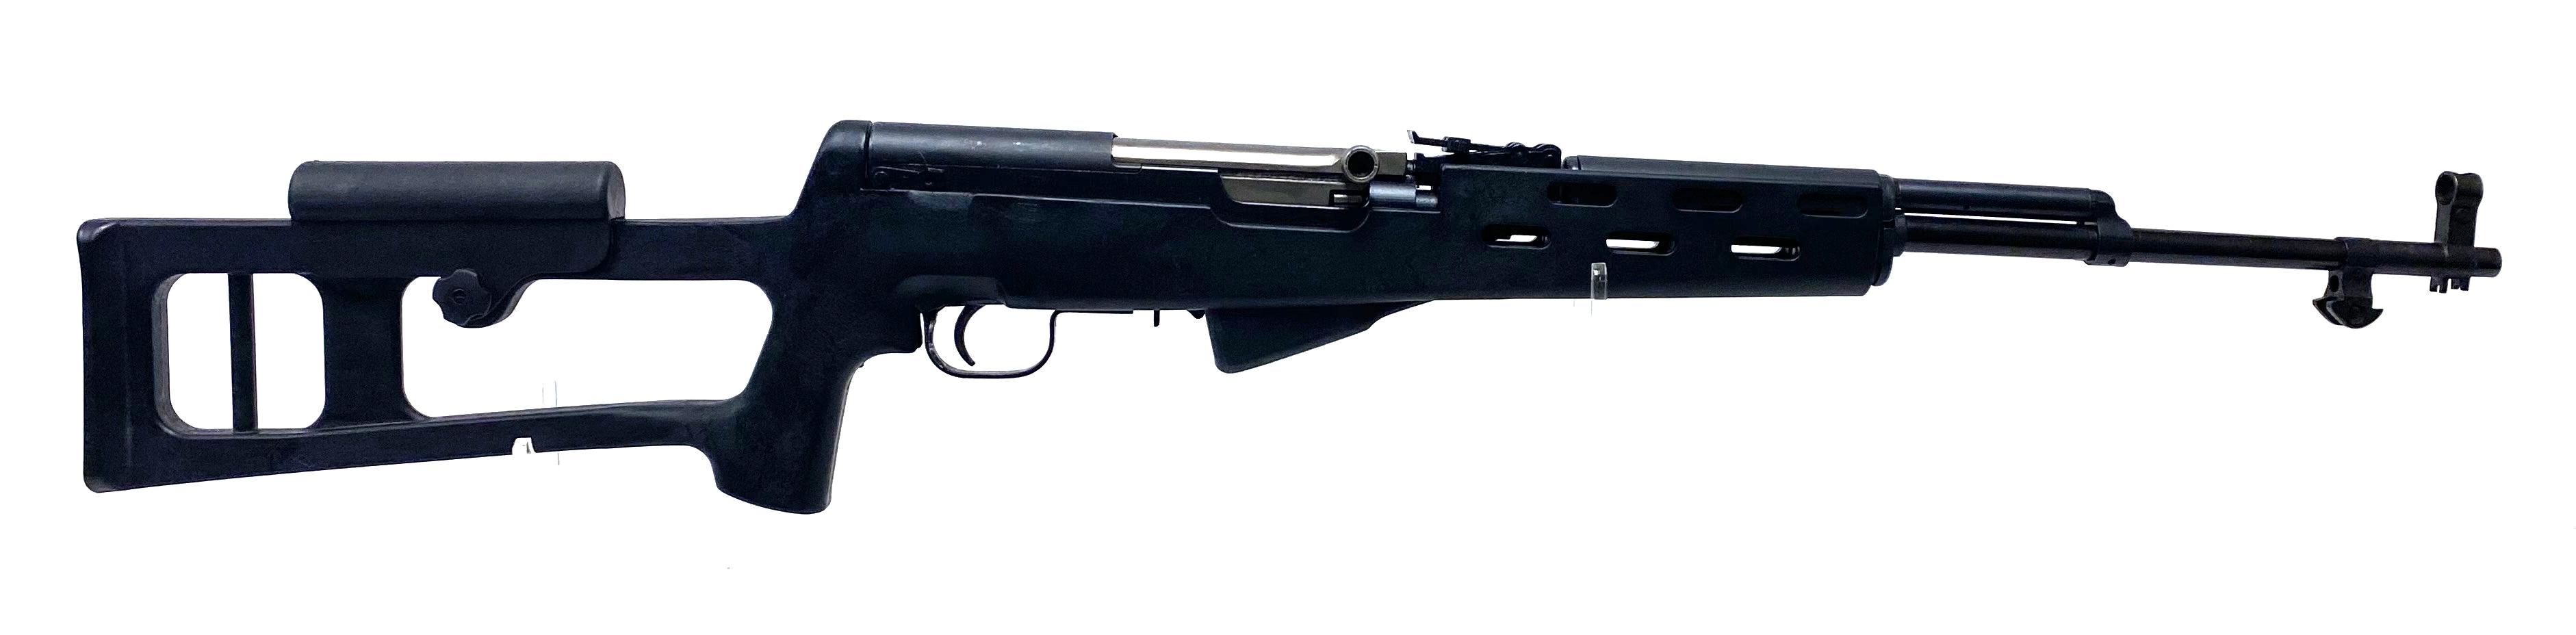 Norinco Chinese SKS 7.62x39mm Semi-Automatic Rifle